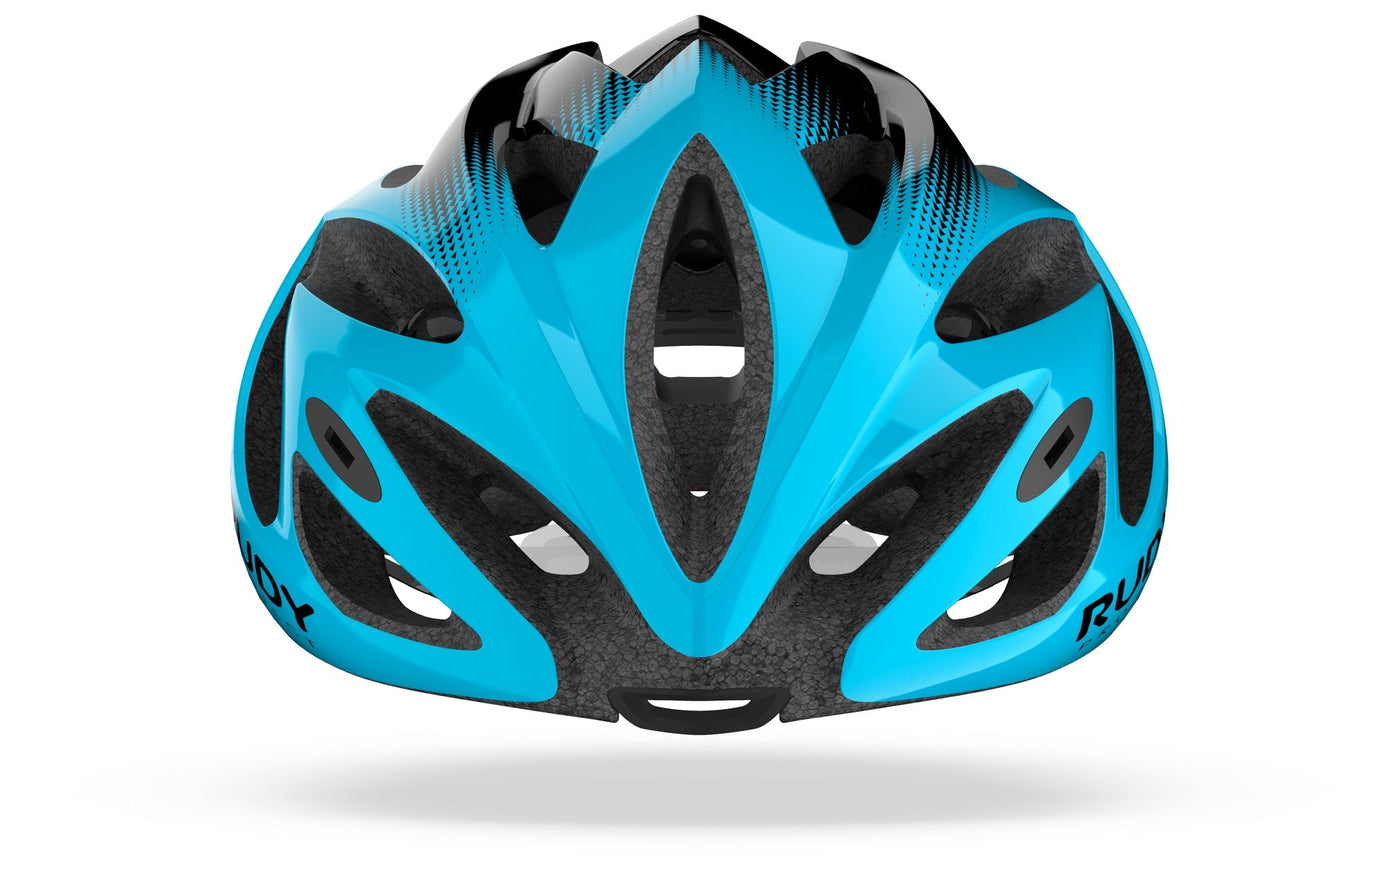 Rudy Project Rush Helmet - Cyclop.in